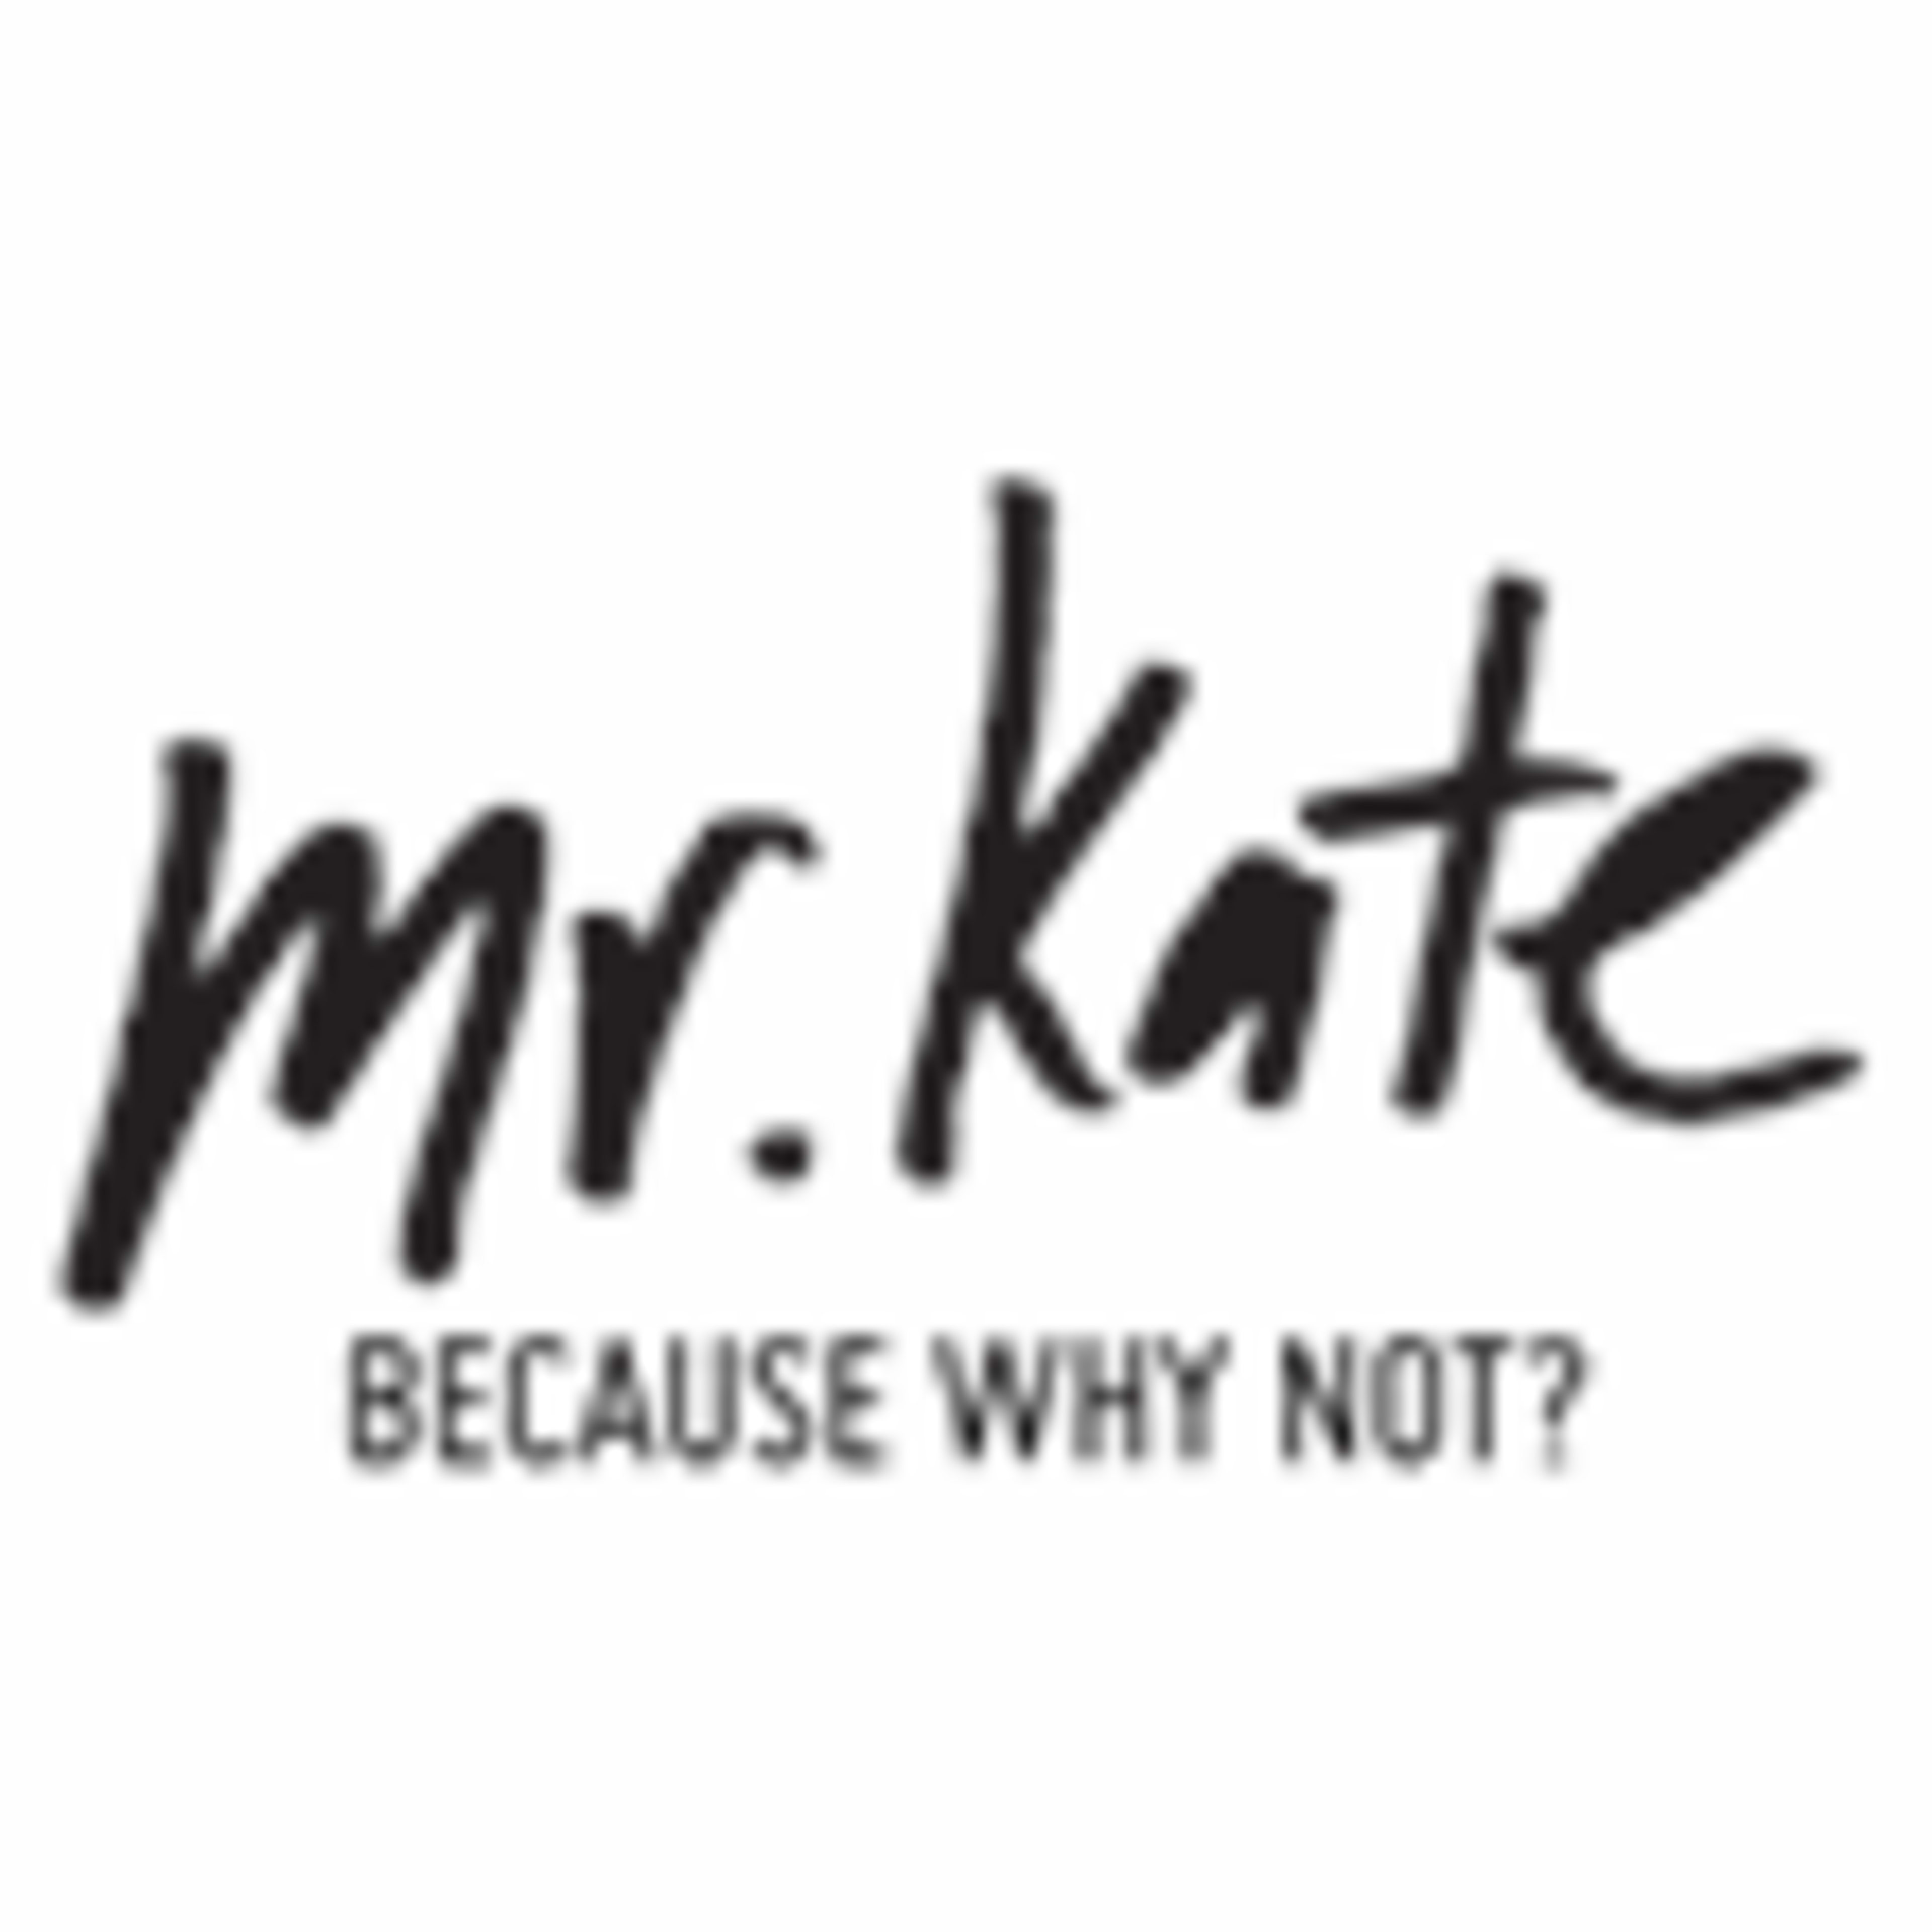 Mr. Kate Code